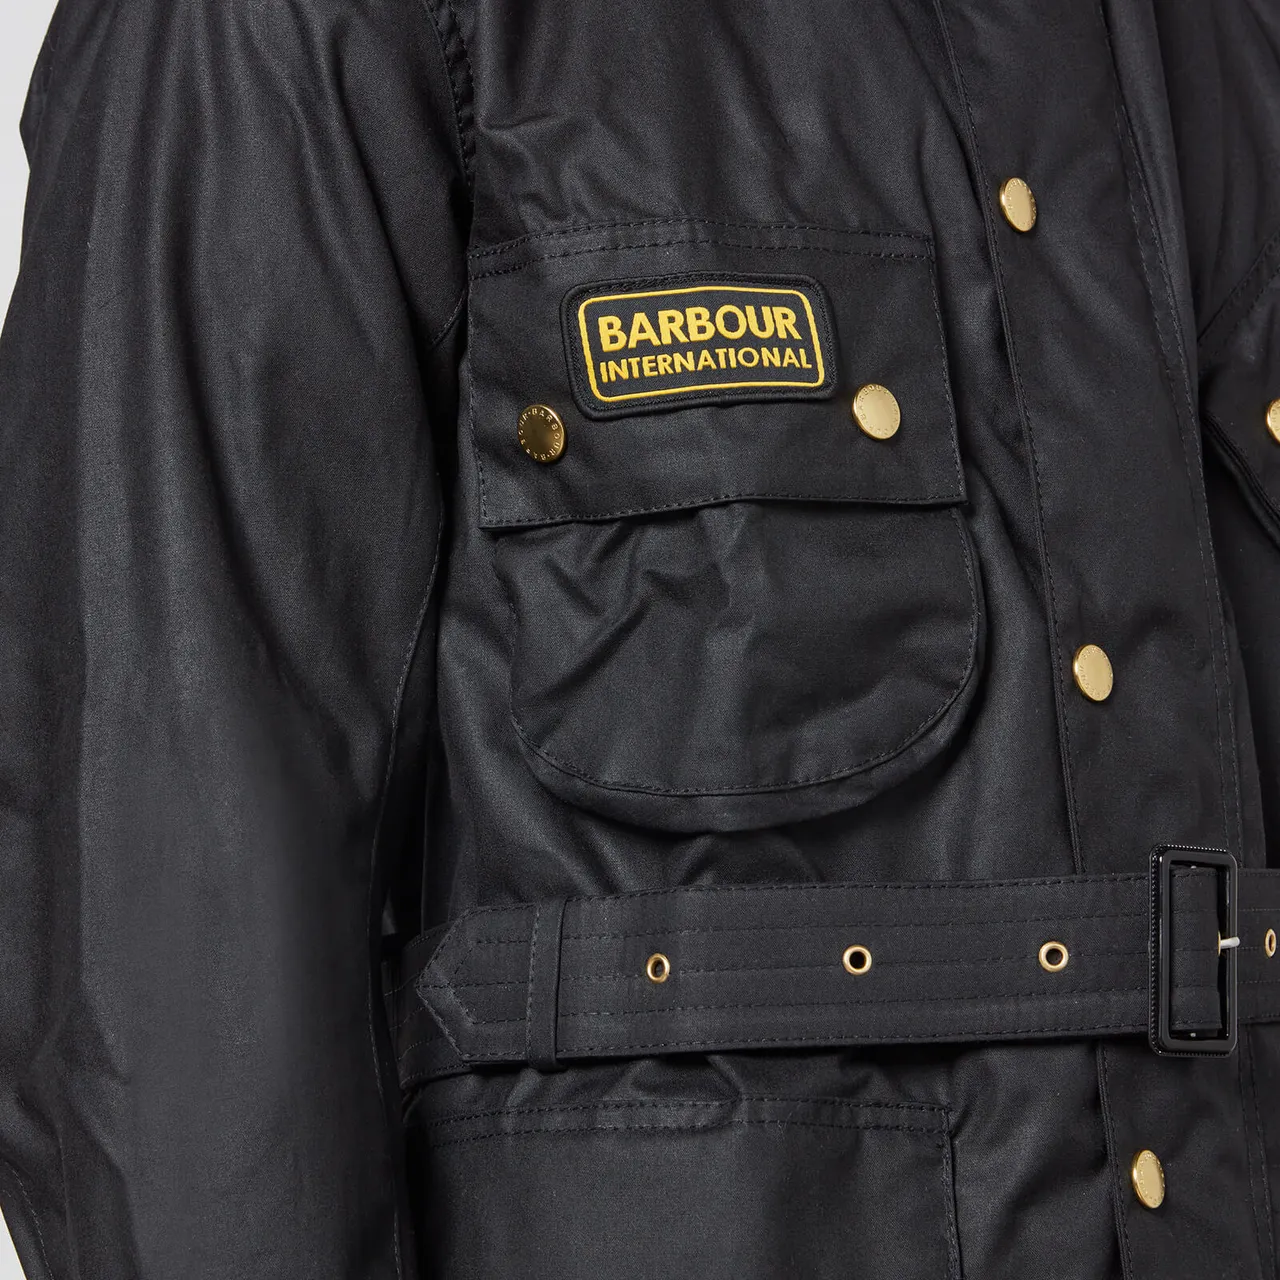 Barbour International Men's Original Jacket - Black - 46 /